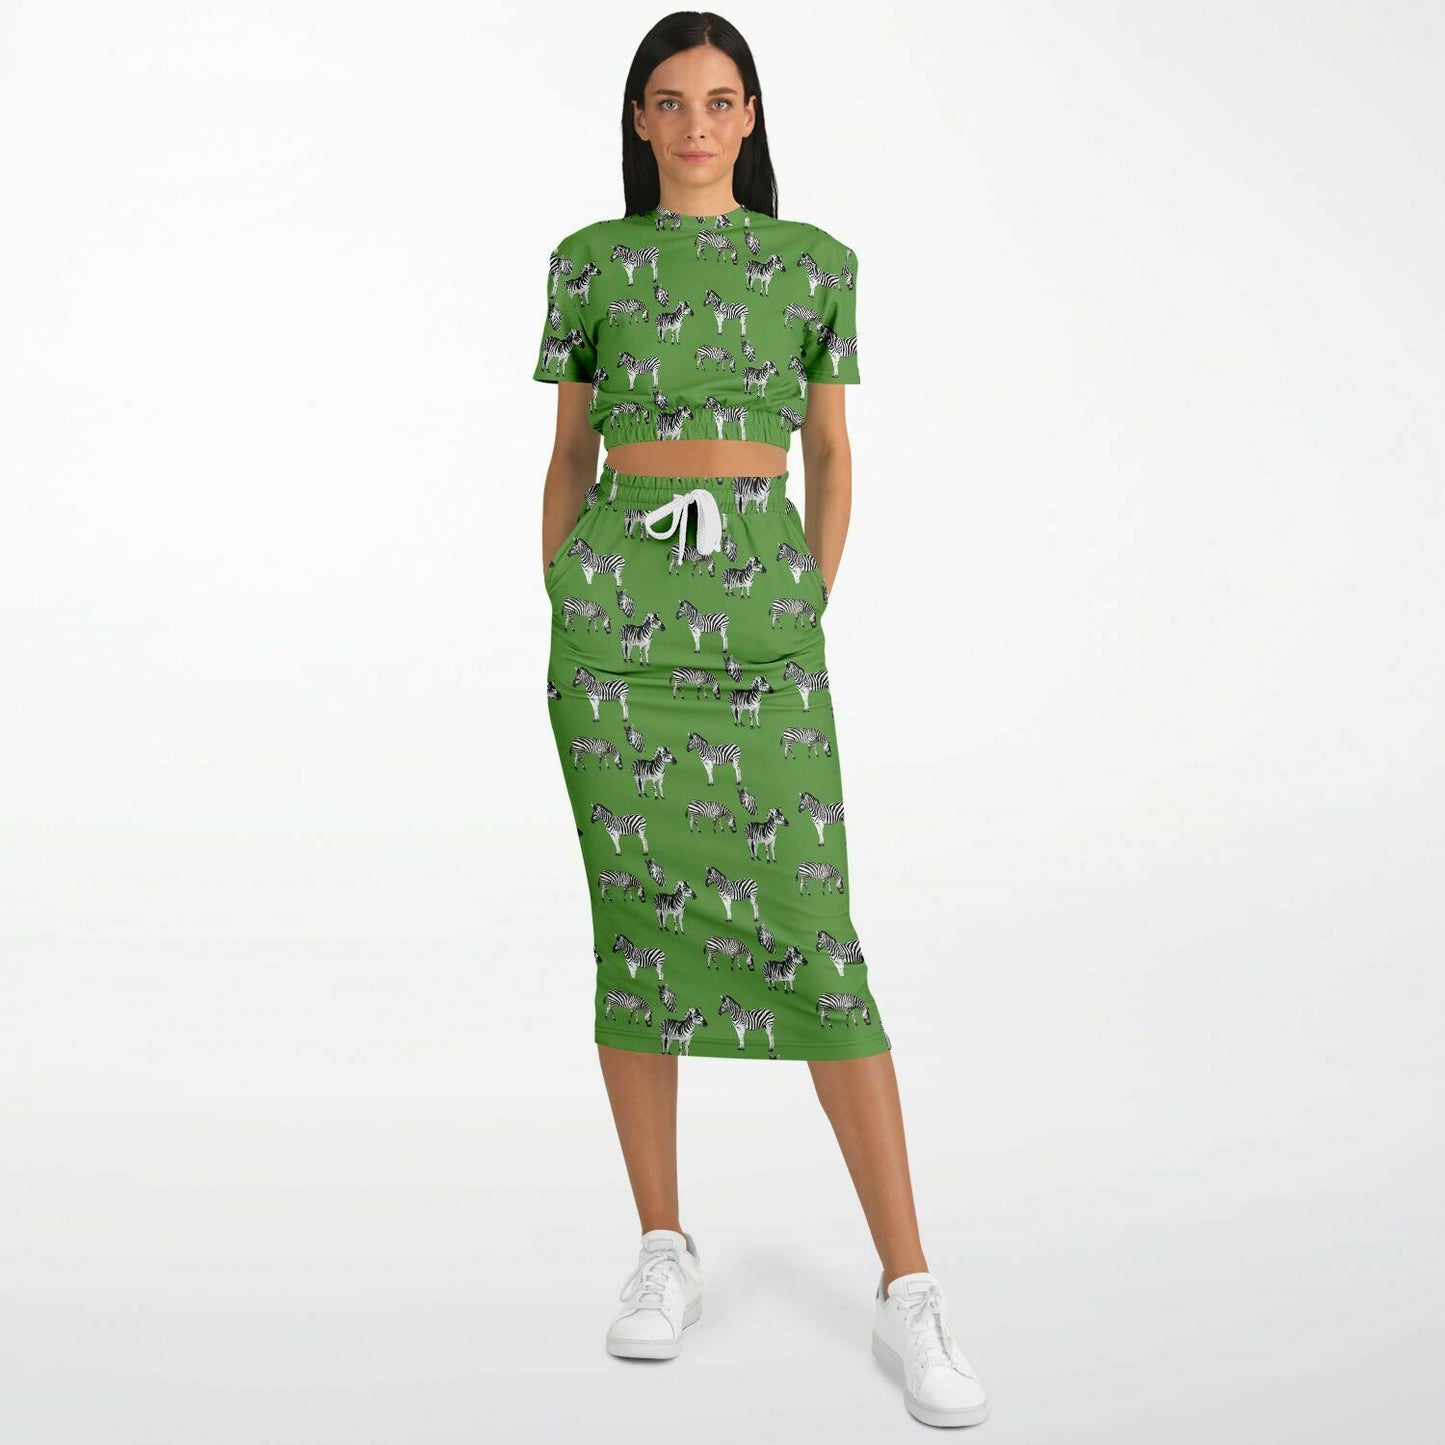 Safari Zebra on Green Grass Fashion Cropped Short Sleeve Sweatshirt and Long Pocket Skirt Set - Hip-Hatter